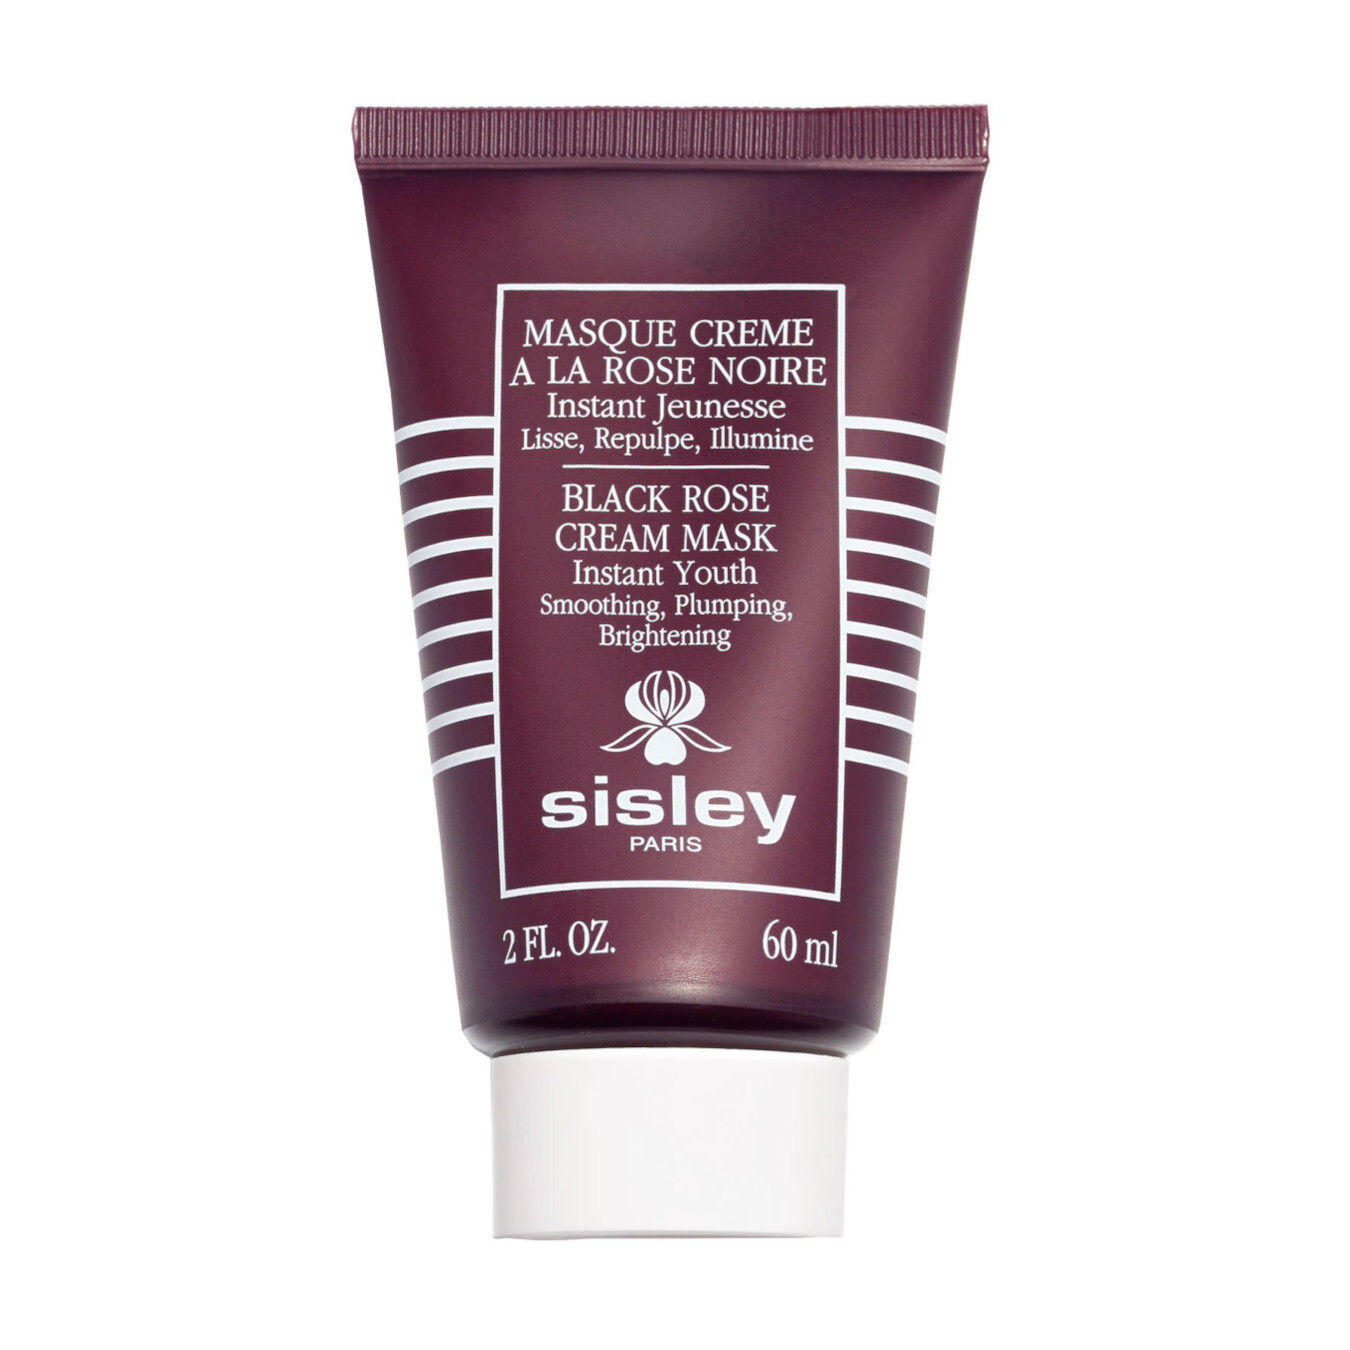 Sisley Masque Crème à la Rose Noire Creme-Maske 60ml Damen von Sisley